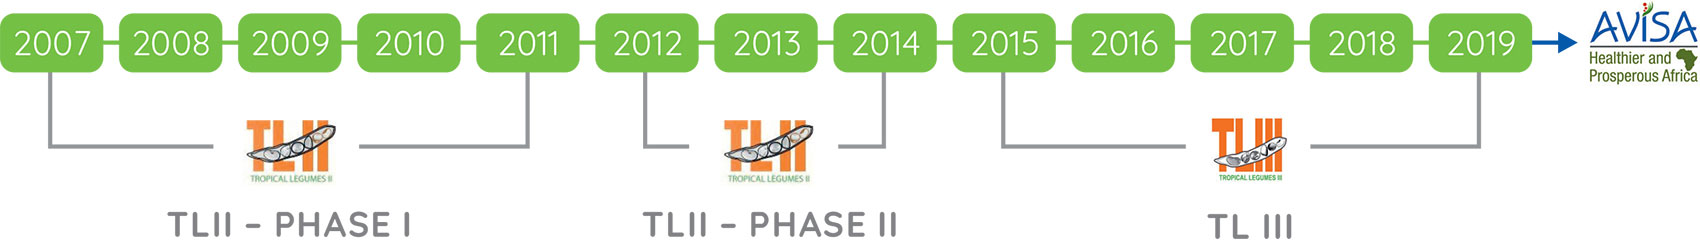 Tropical Legumes Hub - Timeline